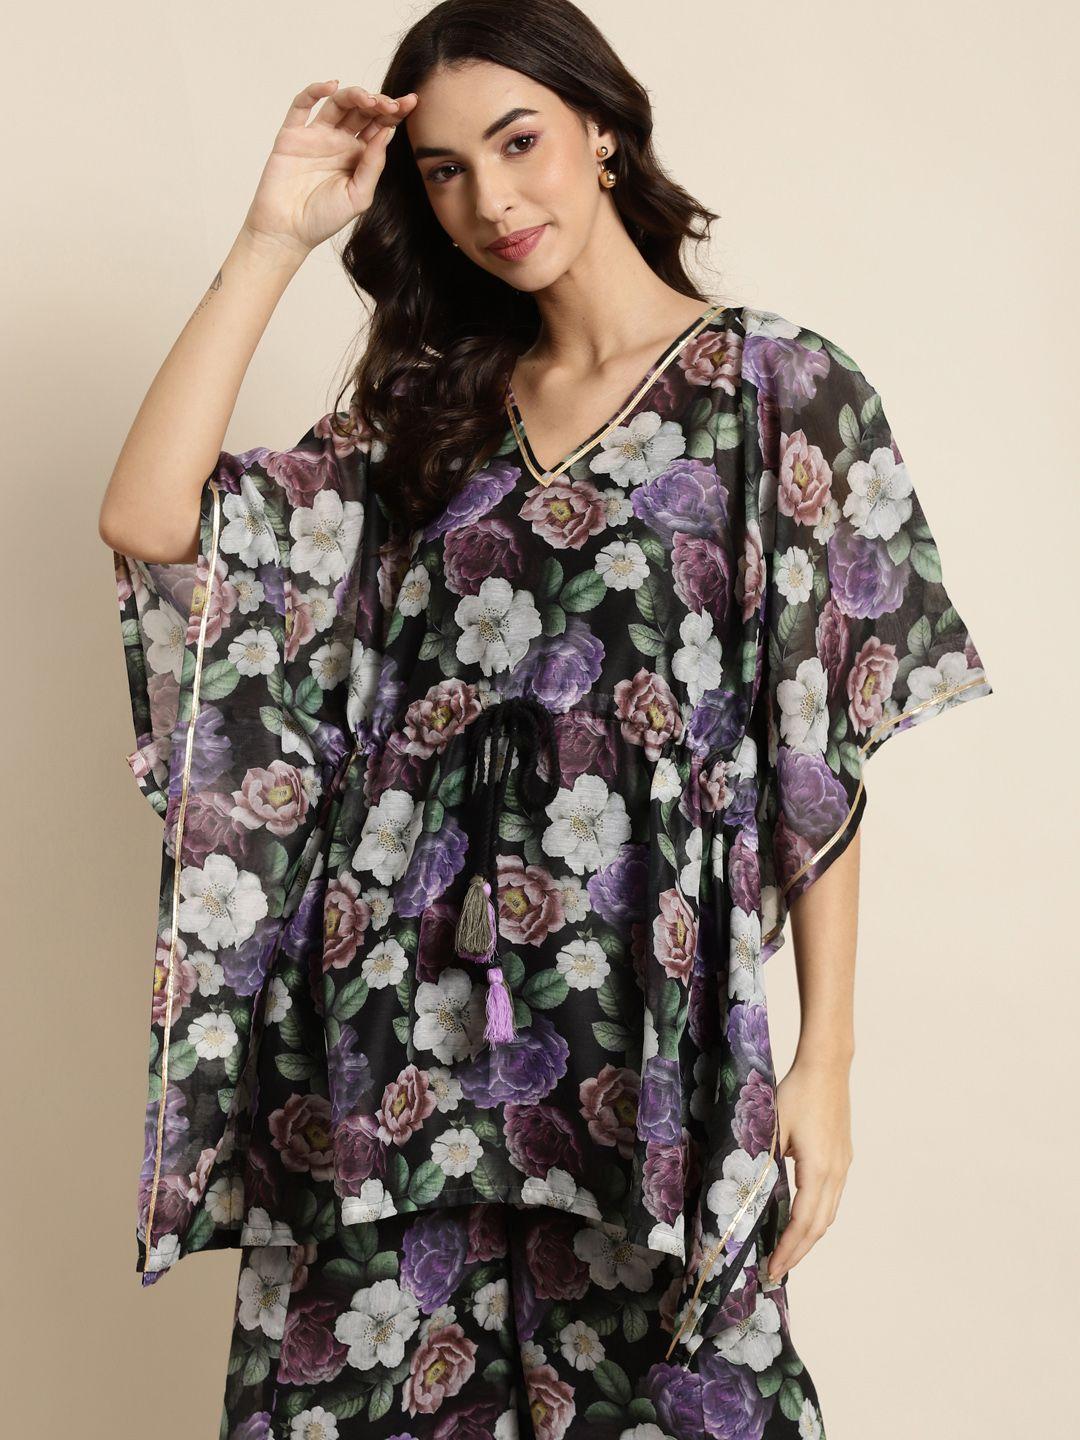 shae-by-sassafras-black-&-purple-floral-print-kaftan-top